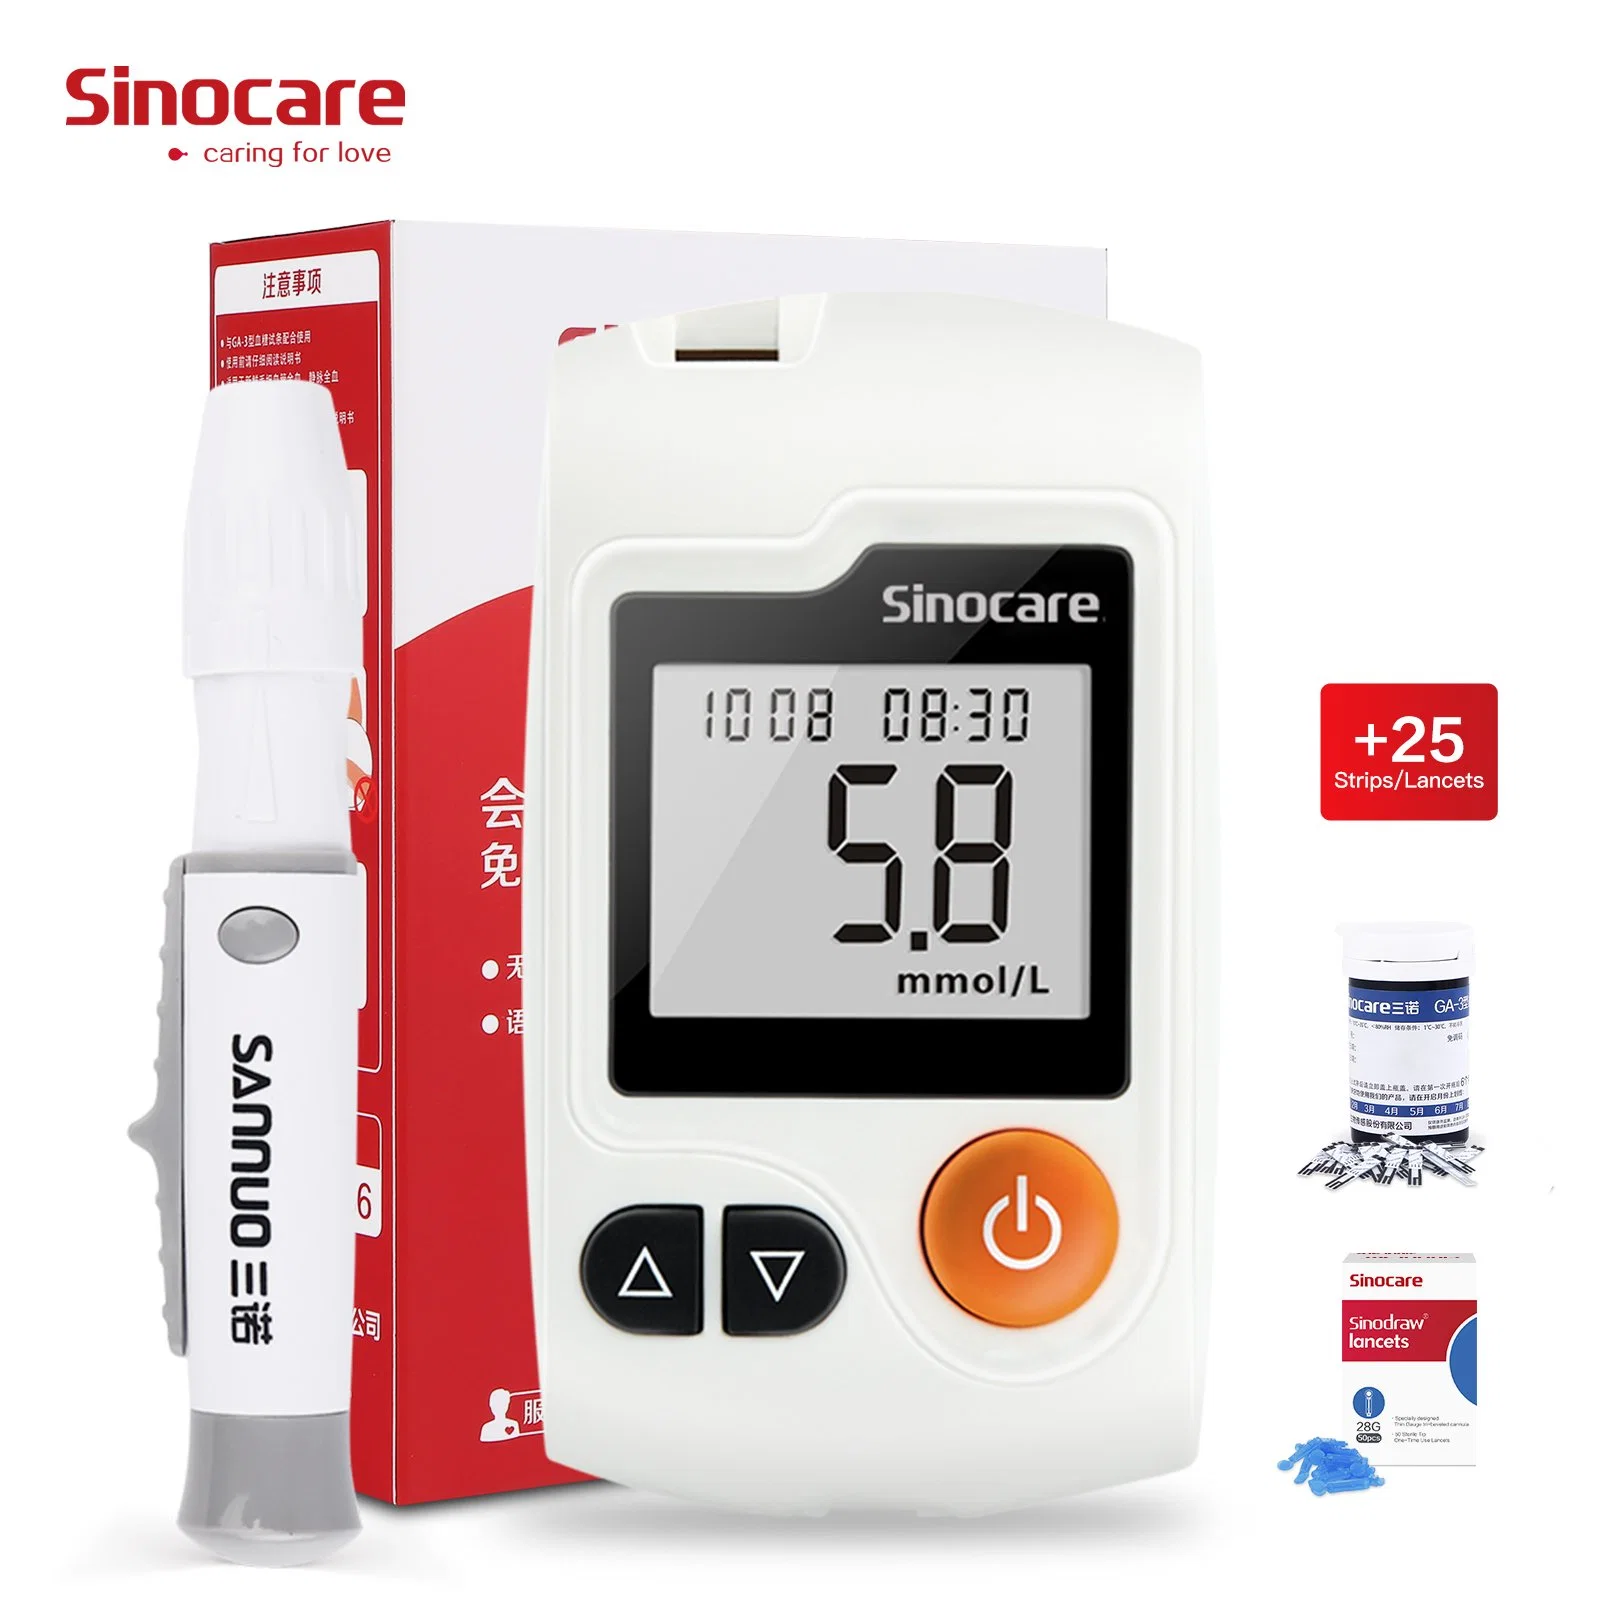 Sinocare Exactive Vital Glucose Test Strips Glucometer Digital Code Free Blood Glucose Test Strips